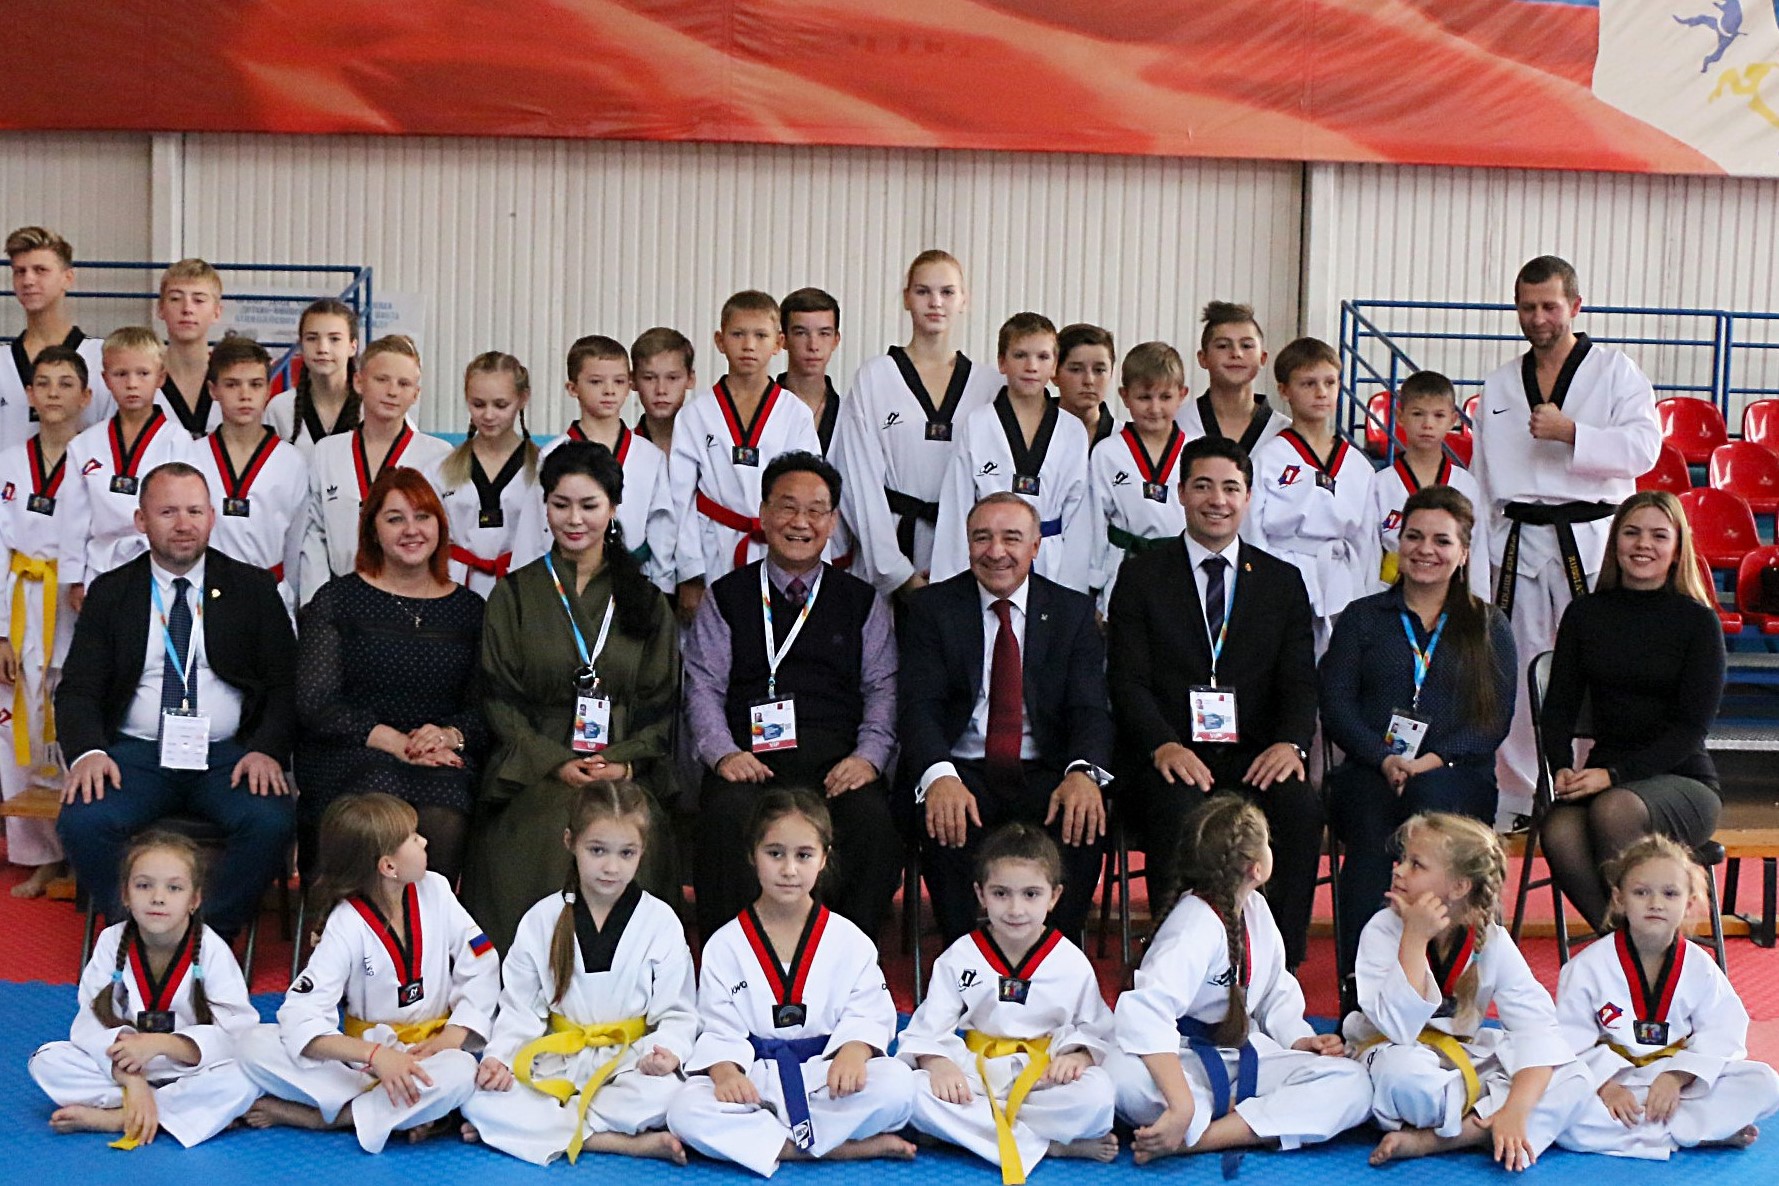 The TAFISA delegation with young Taekwondo students